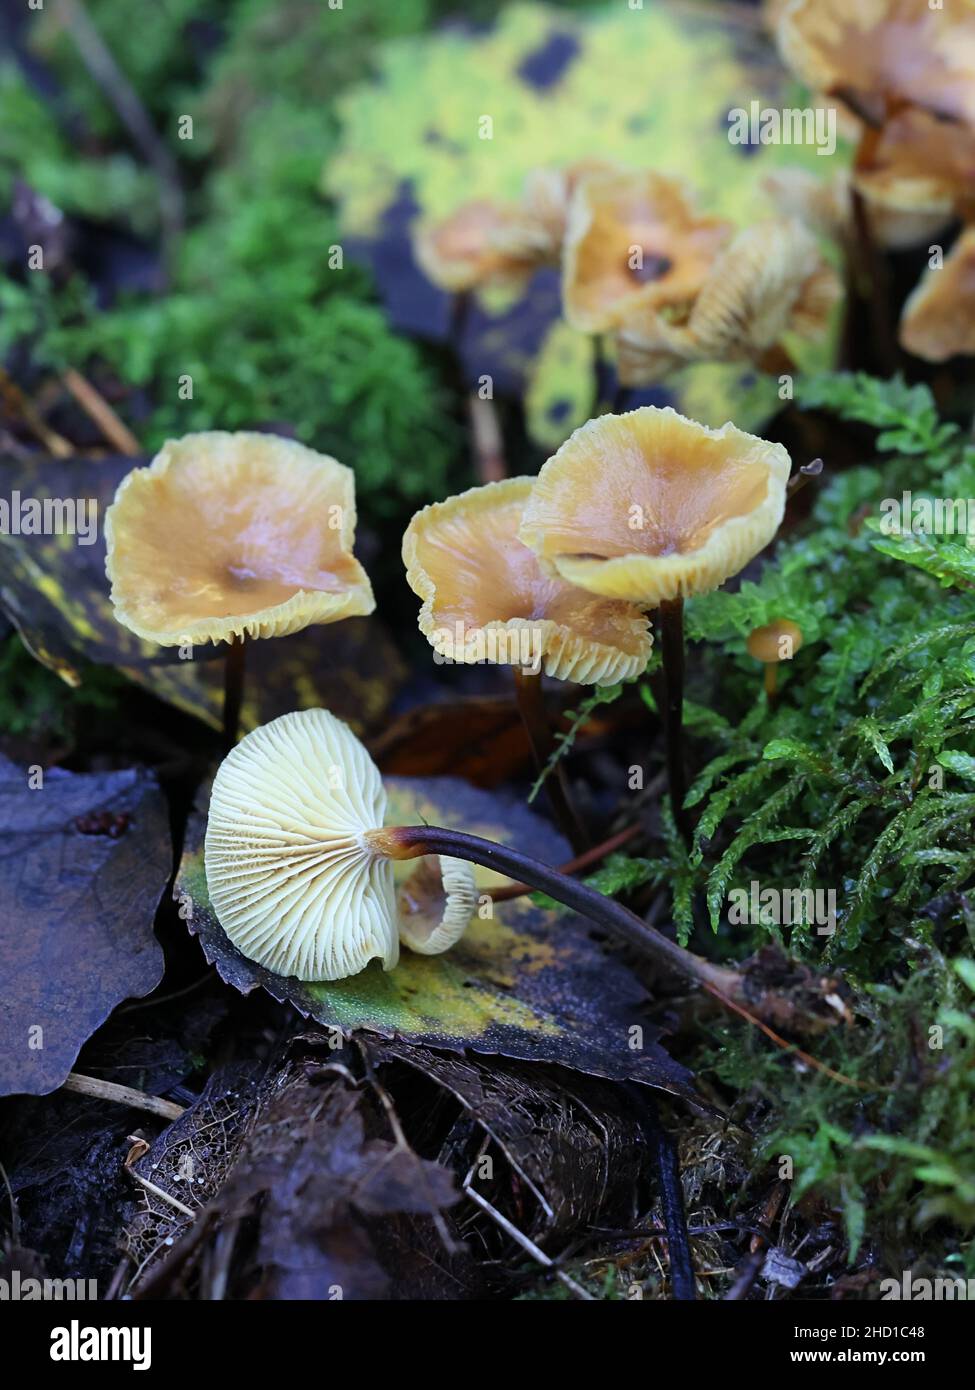 Xeromphalina cauticinalis, also known as Marasmius cauticinalis, the Pinelitter Gingertail, wild mushroom from Finland Stock Photo